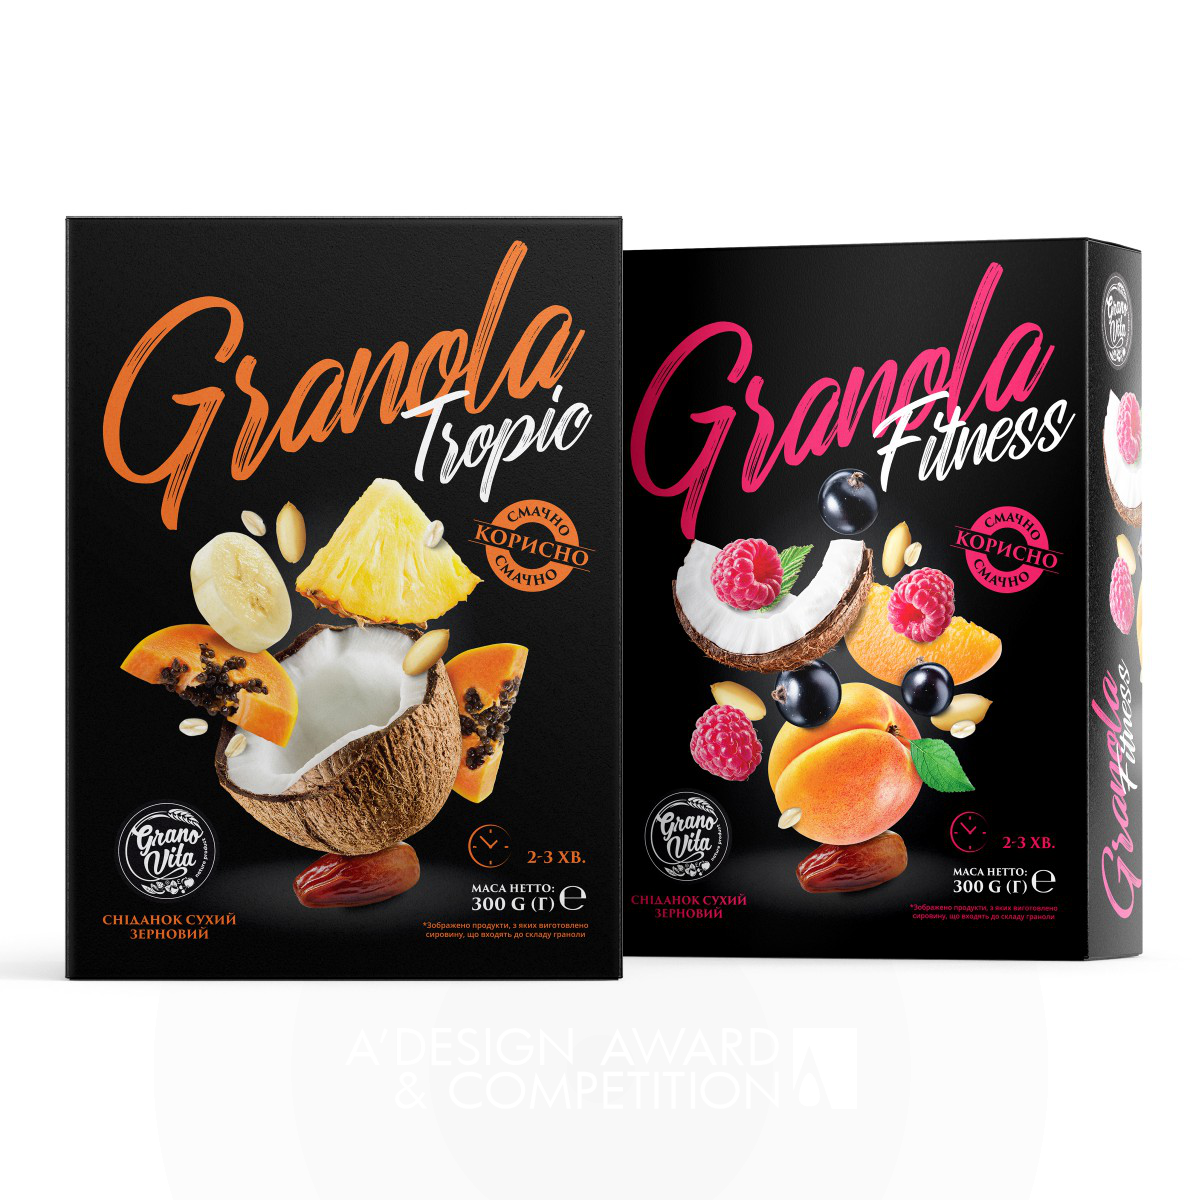 Granovita Granola Packaging